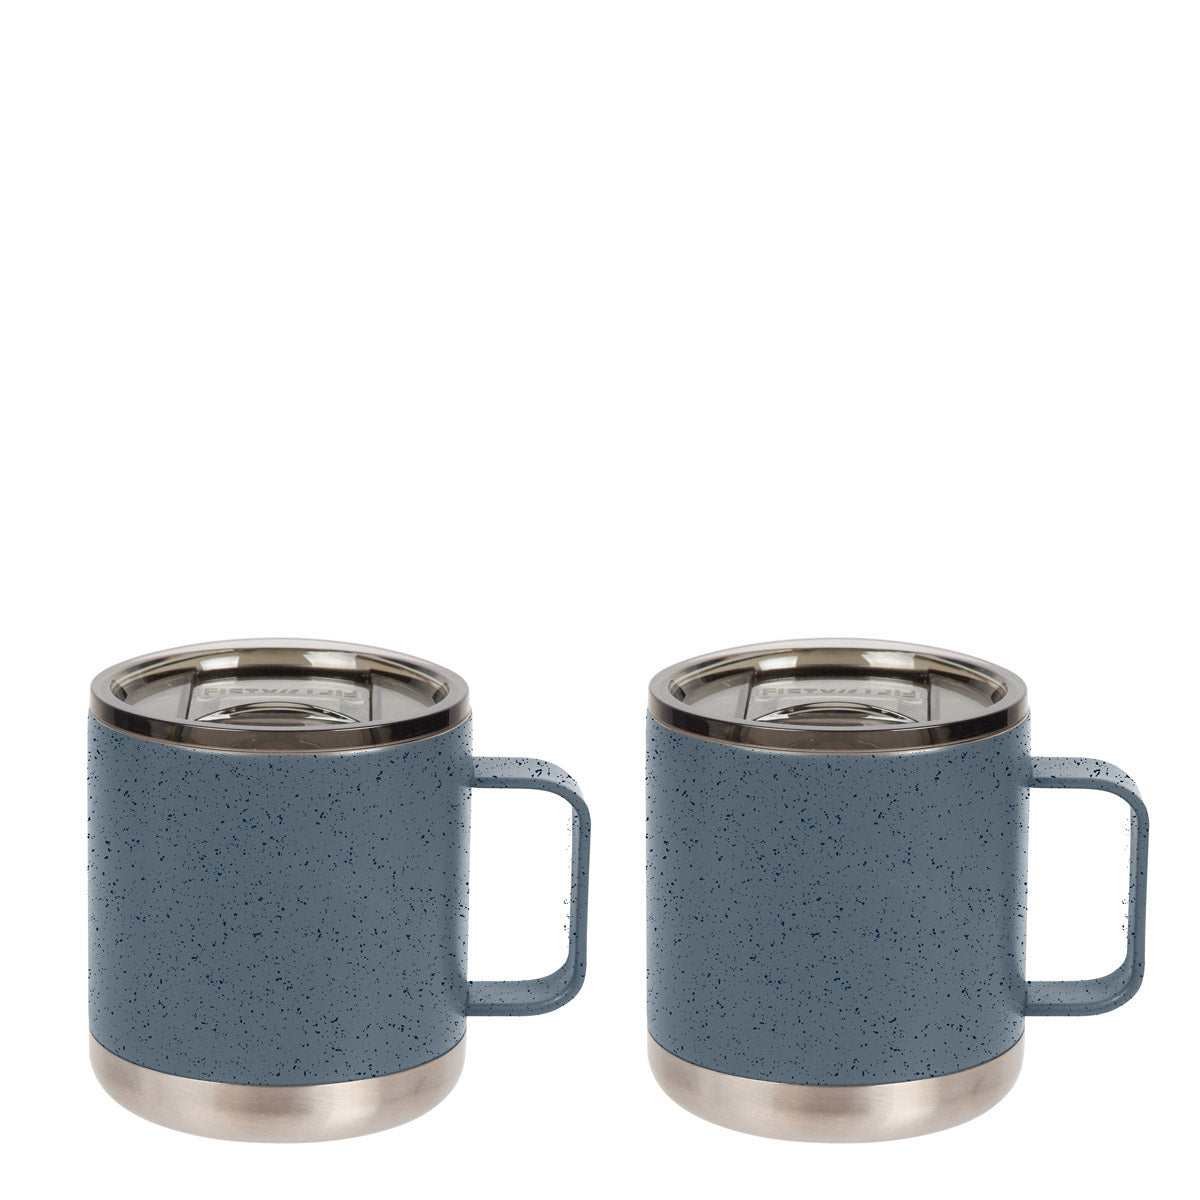 Insulated Coffee Mug with Handle, 15 oz Stainless Steel Togo